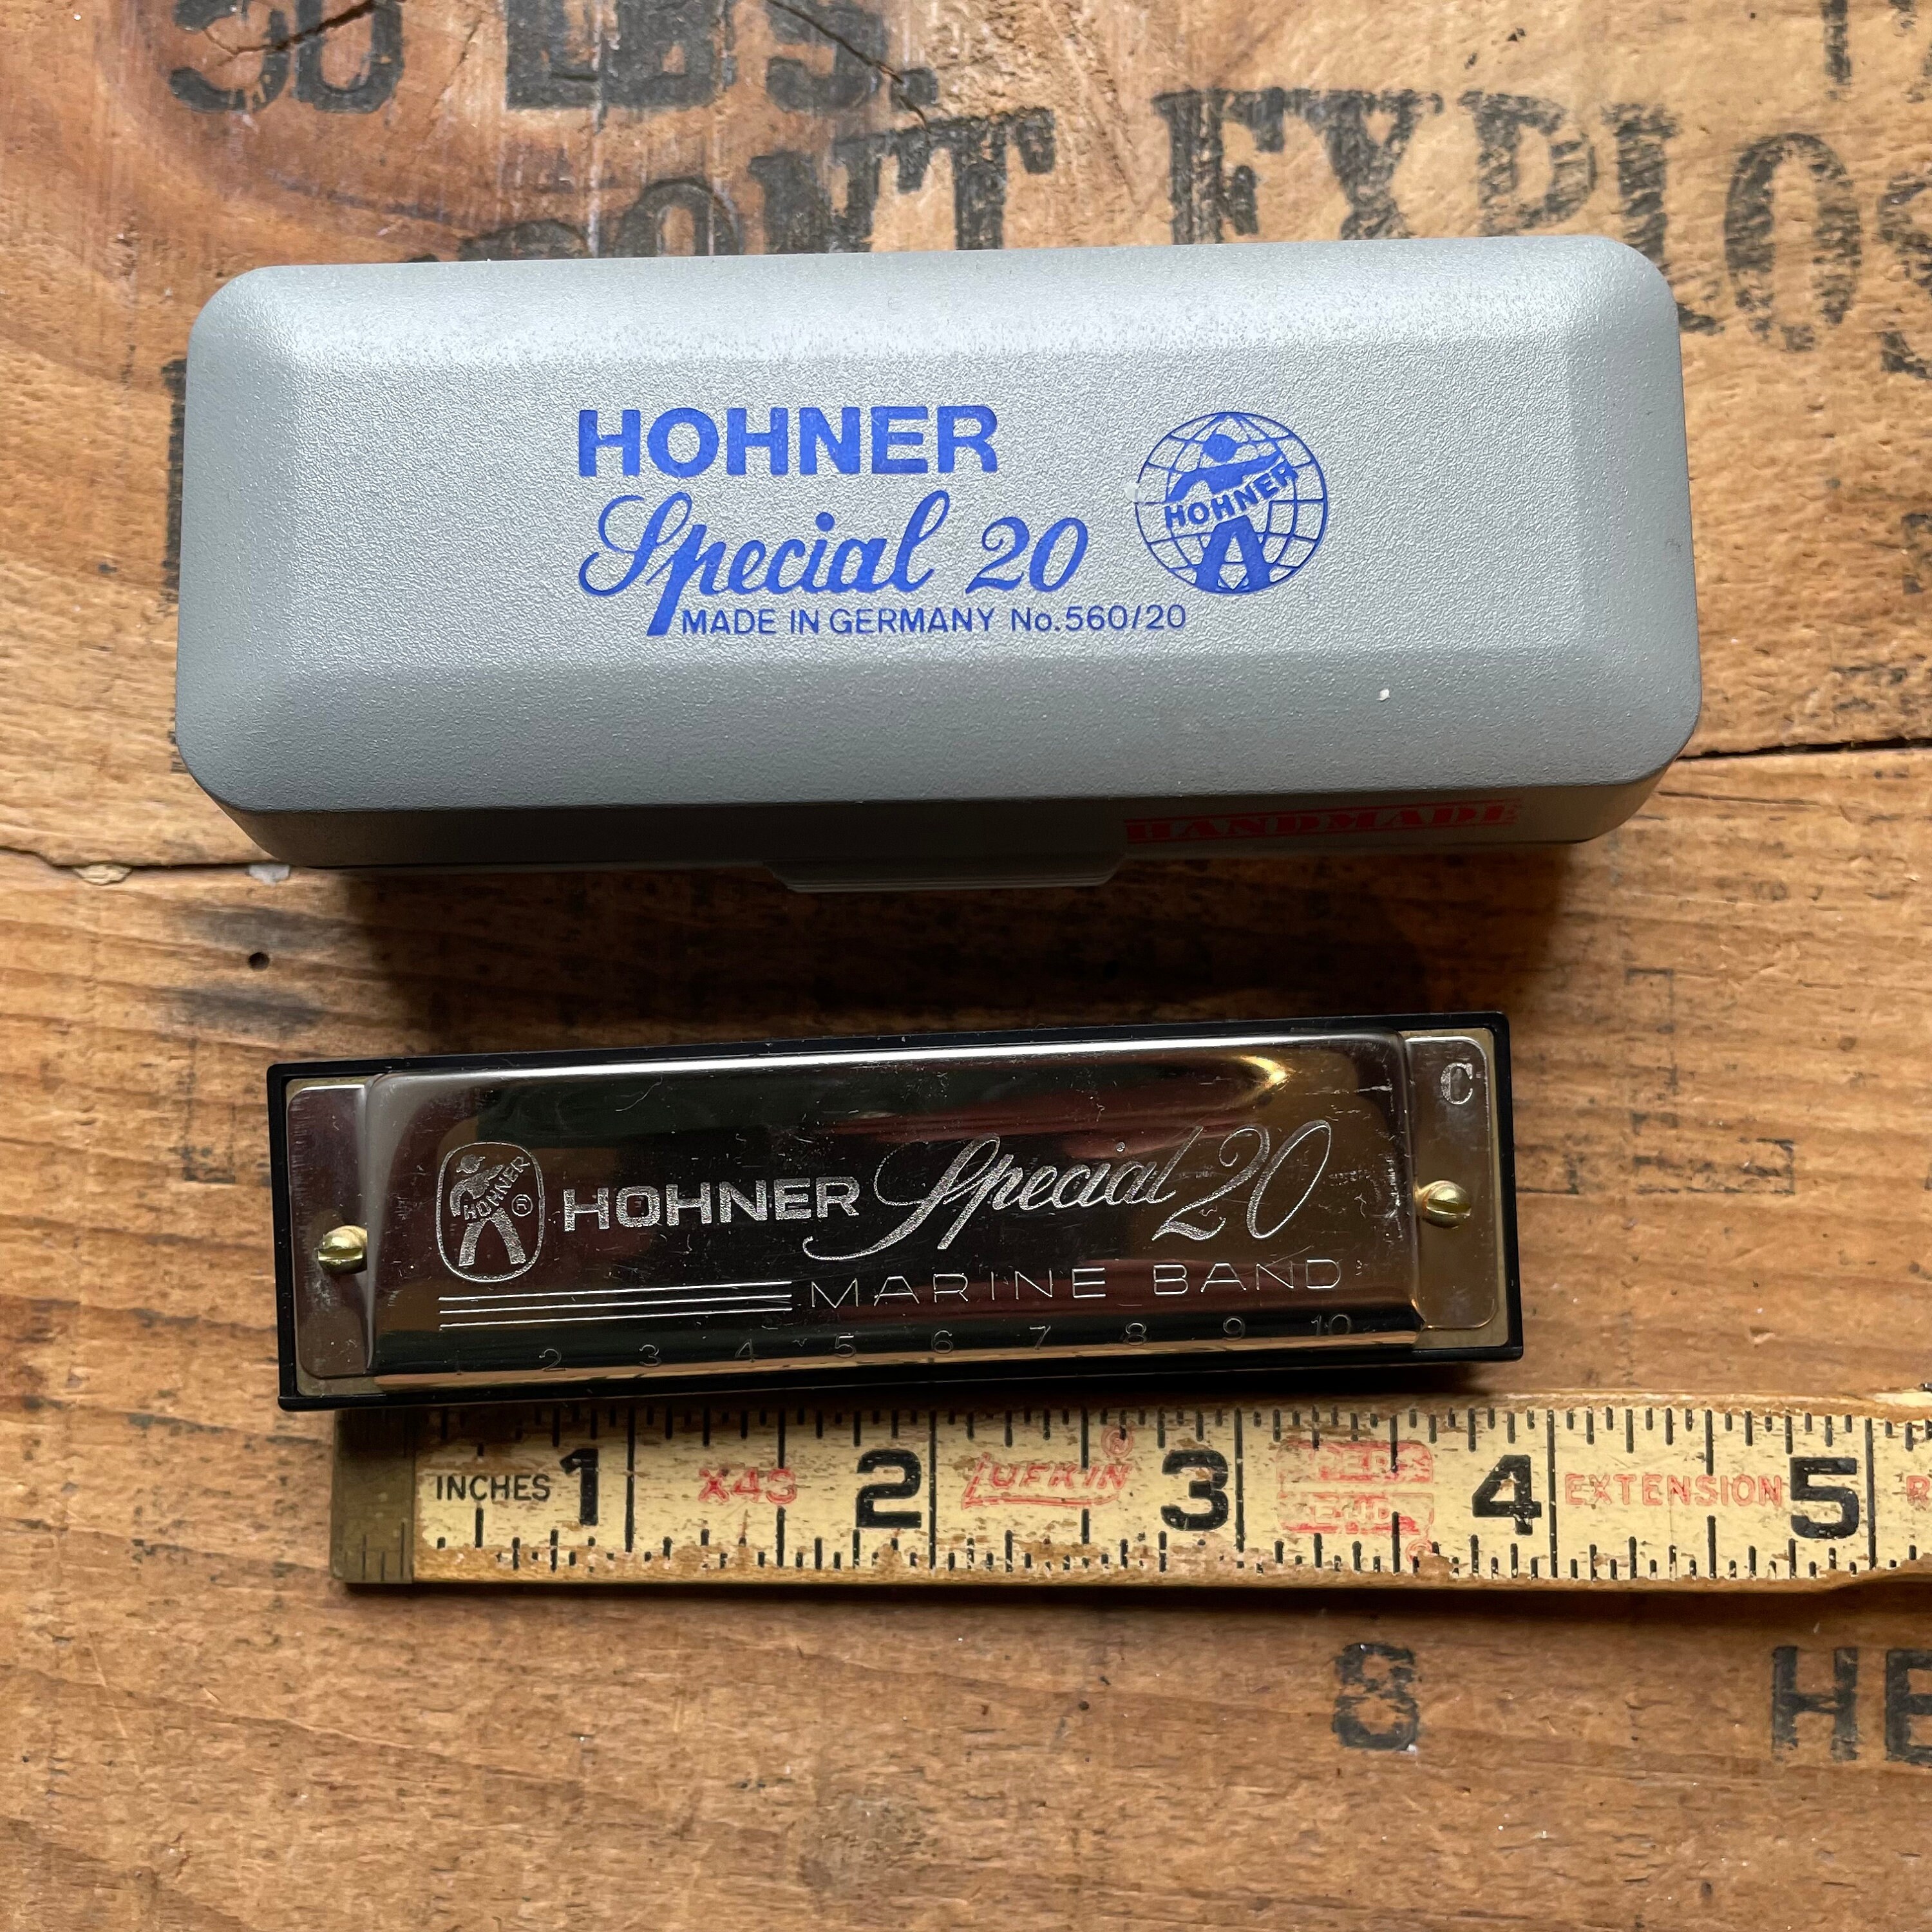 HOHNER SPECIAL 20 MARINE BAND HARMONICA KEY A 560/20 w/CASE, Book, &  Sticker